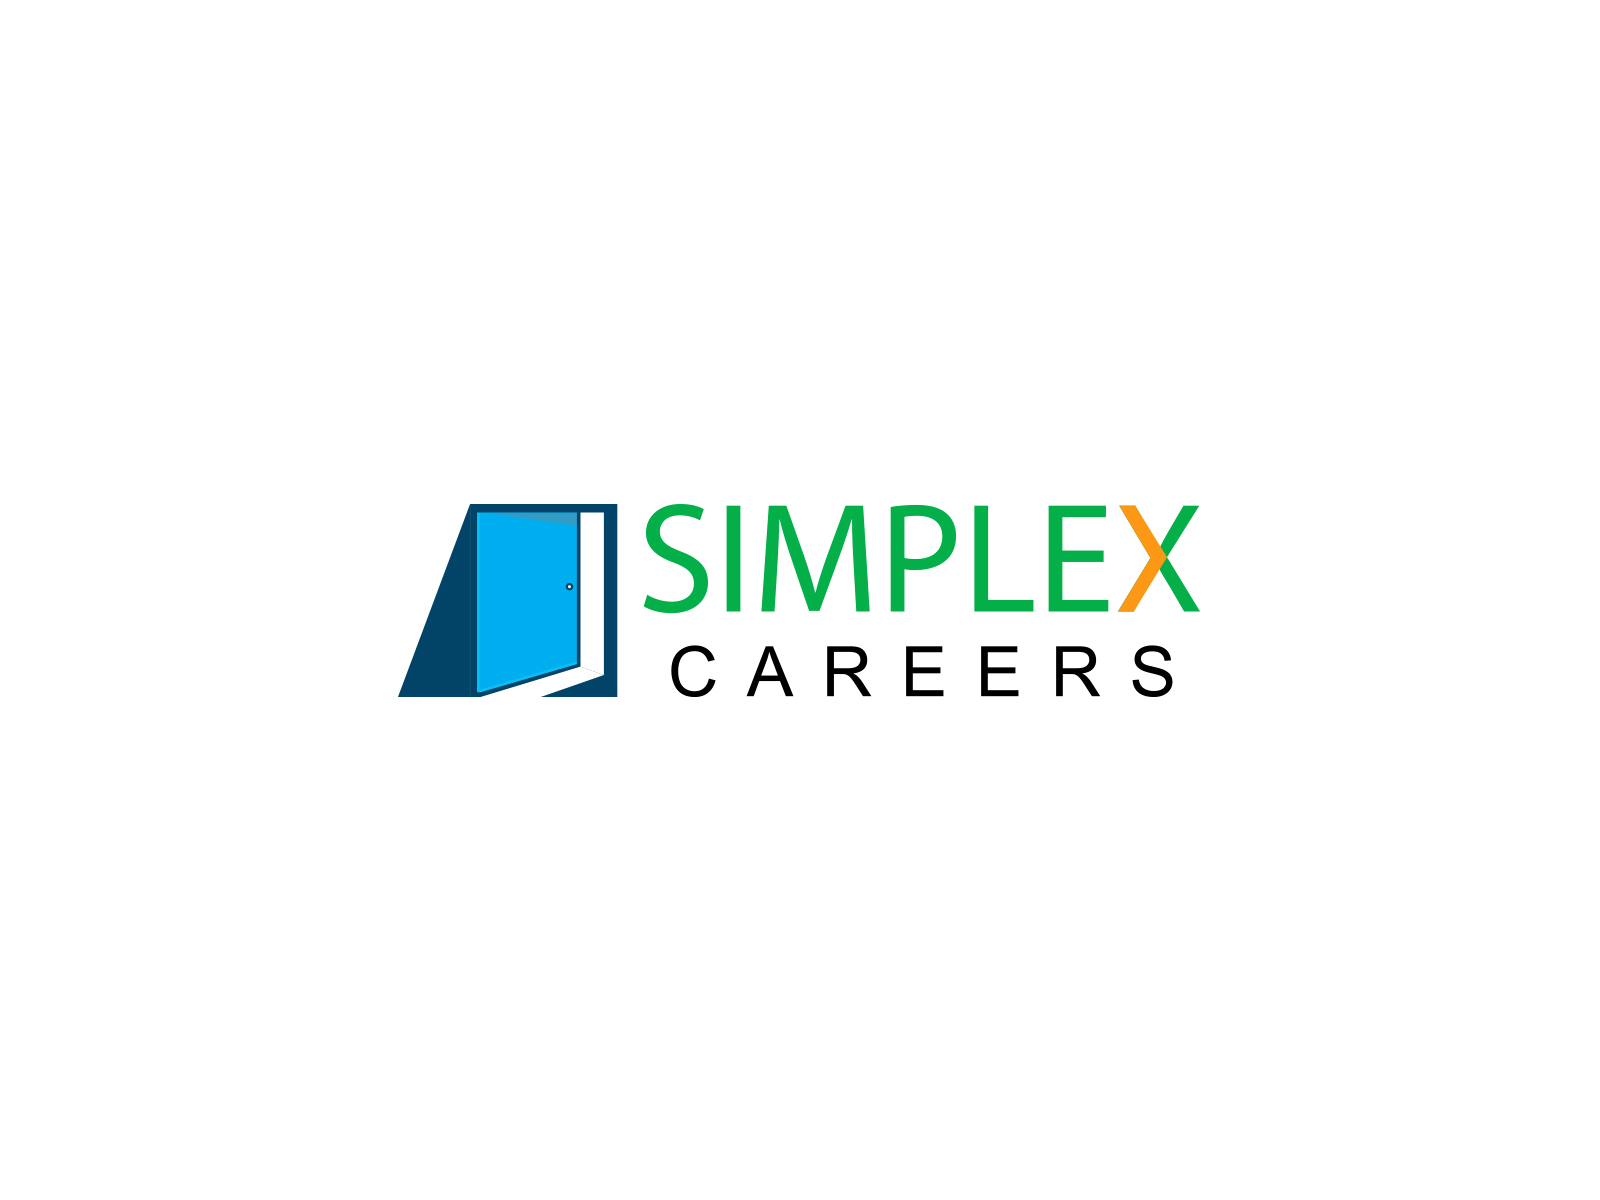 Simplex Career Logo By Khalid Hassan On Dribbble 2463